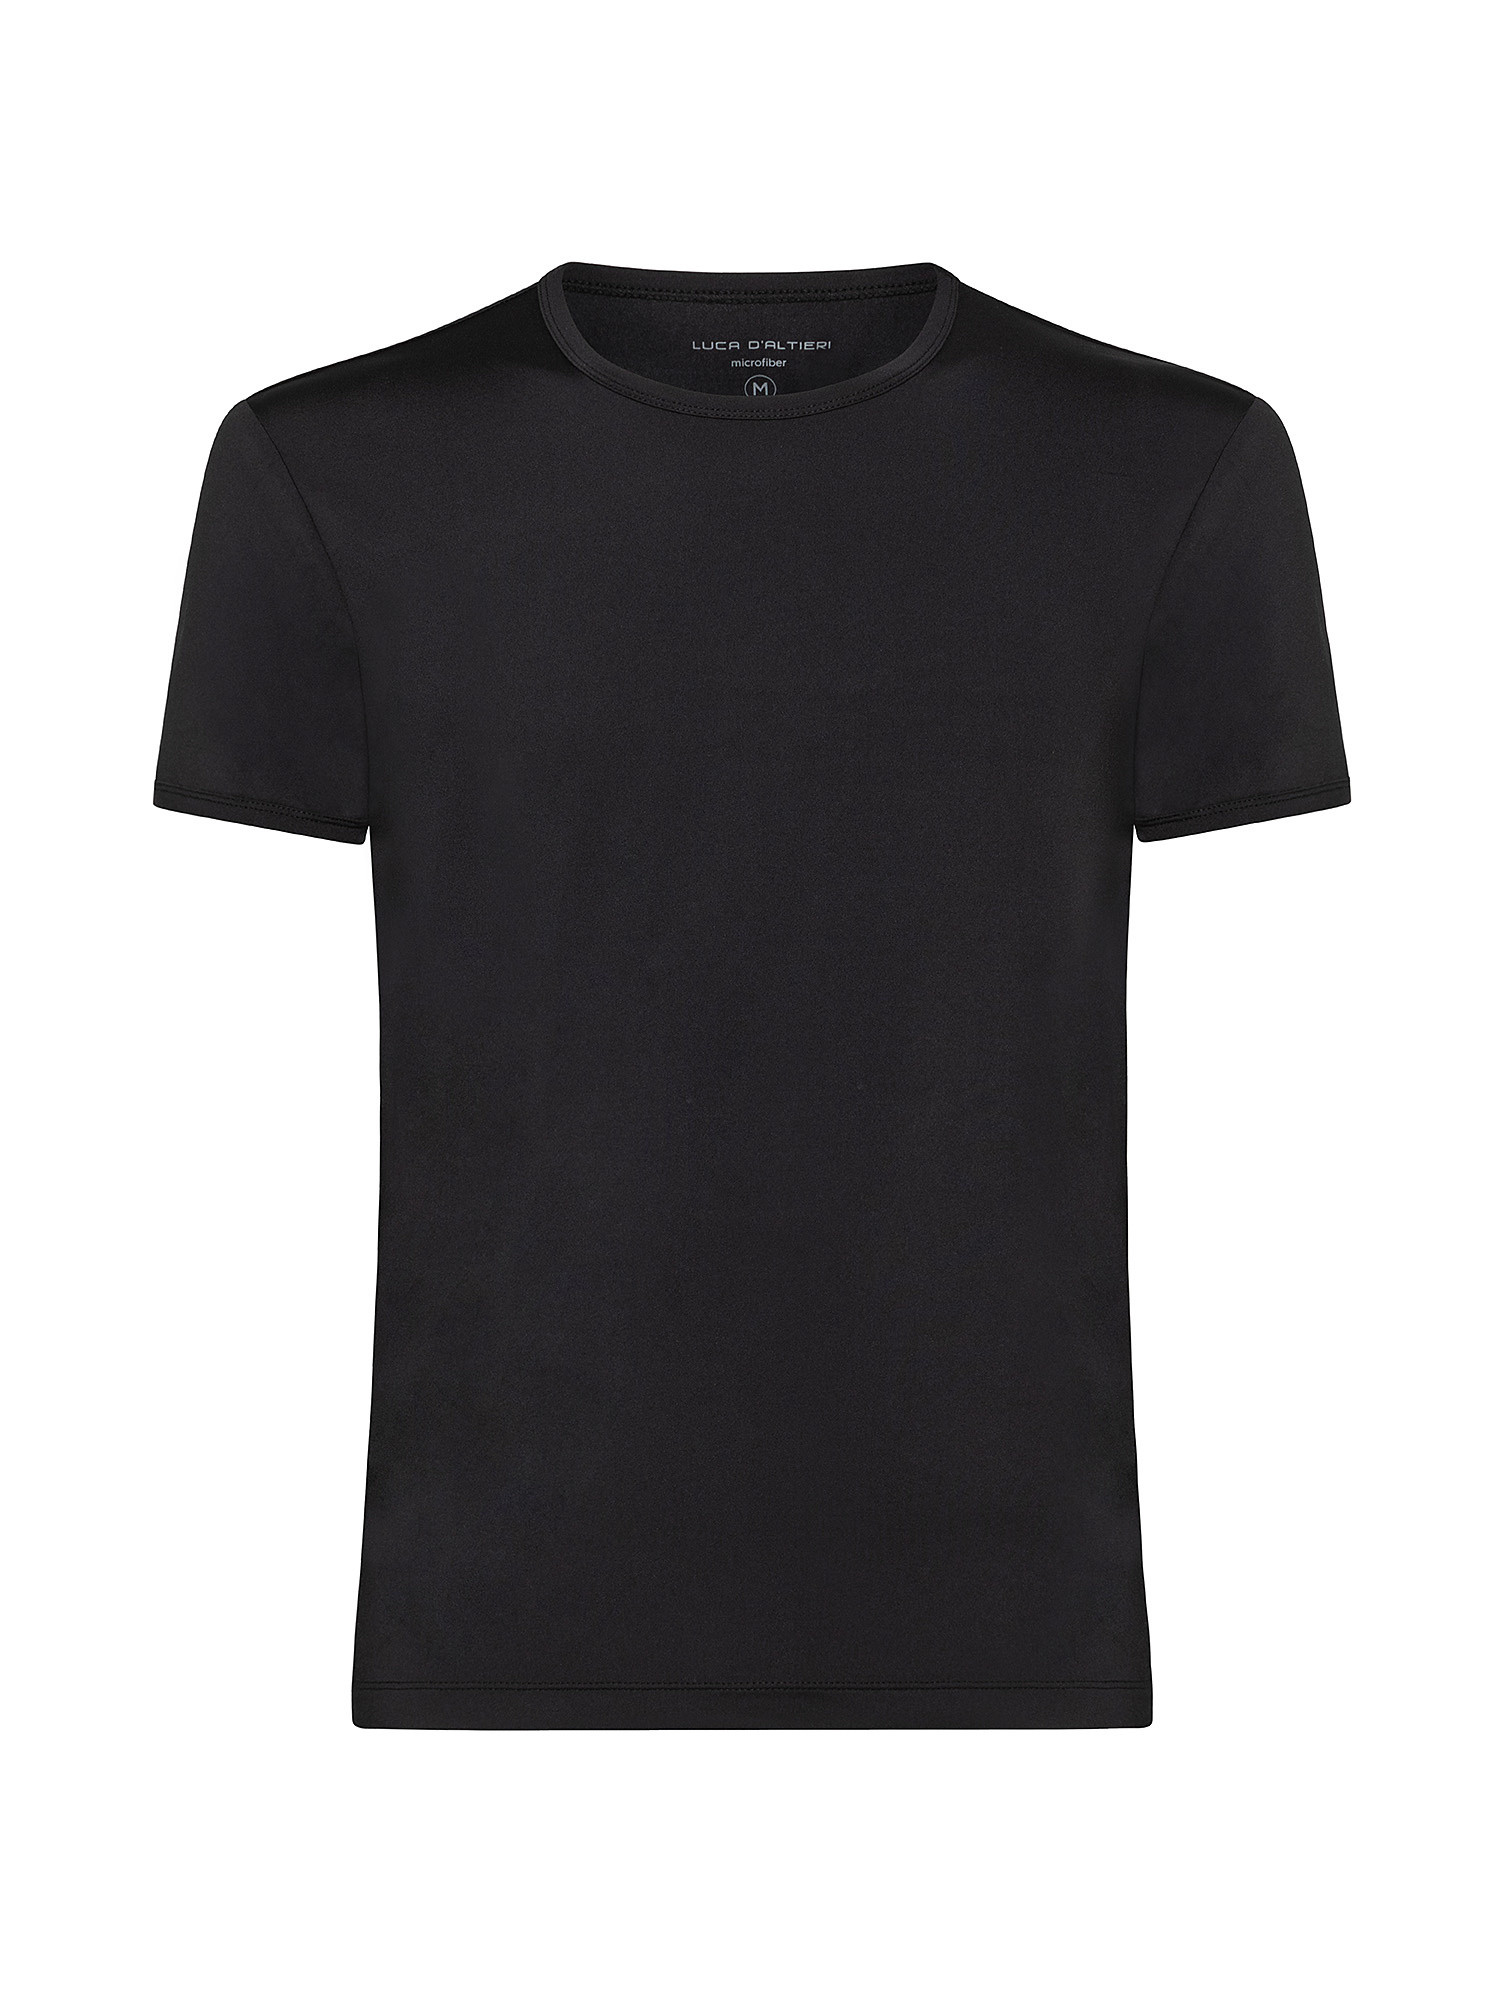 T-shirt girocollo microfibra tinta unita, Nero, large image number 0